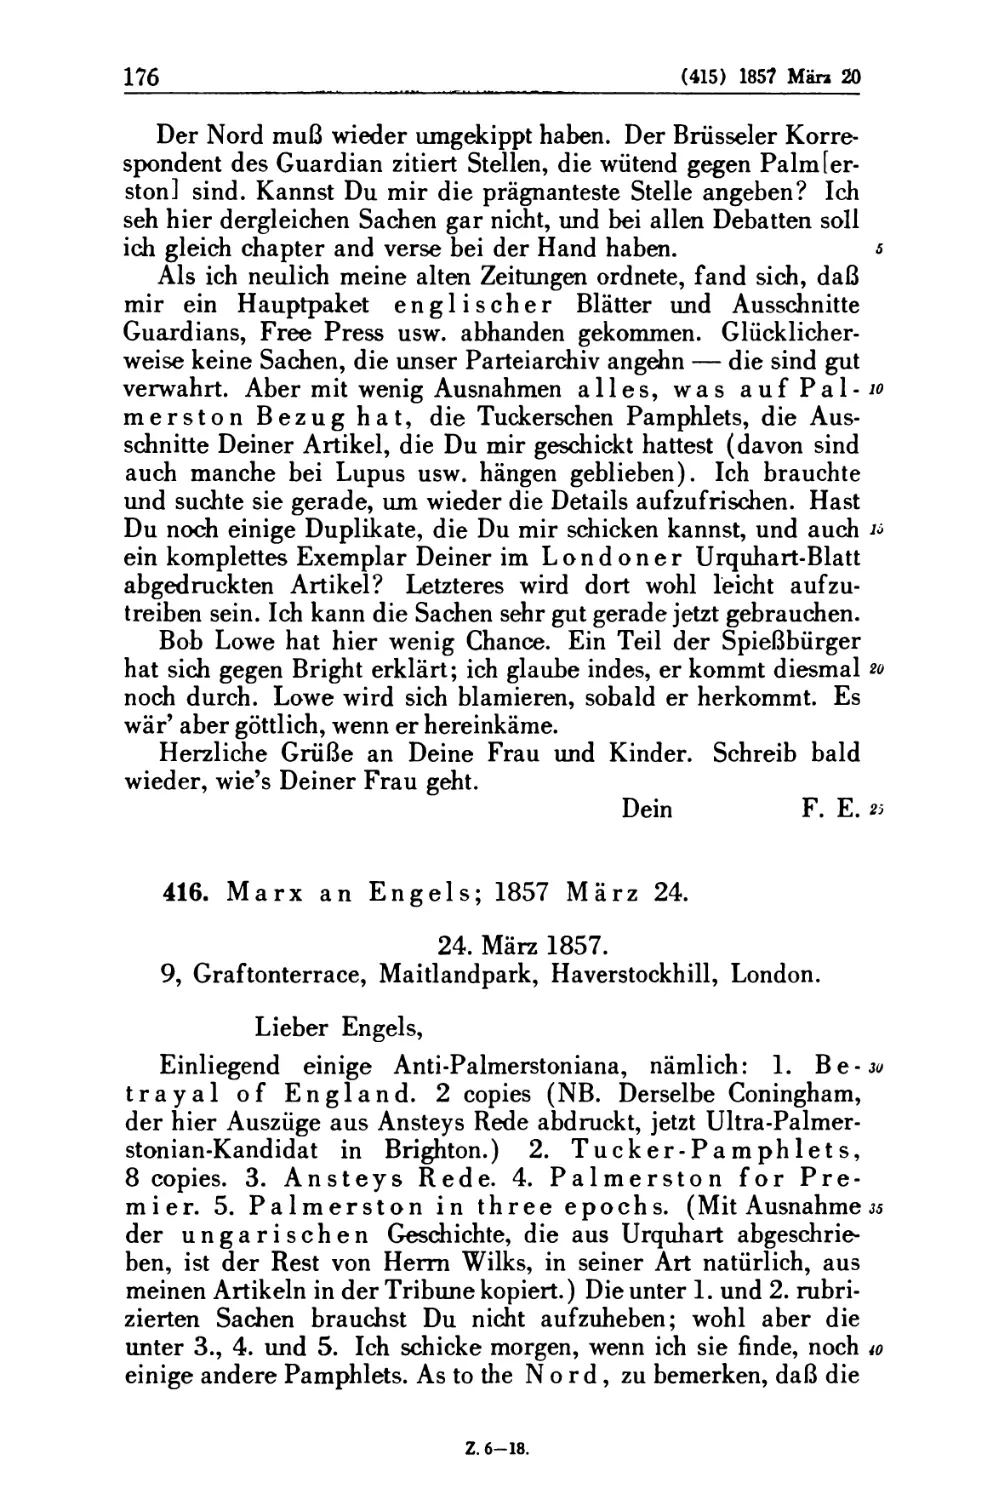 416. Marx an Engels; 1857 März 24